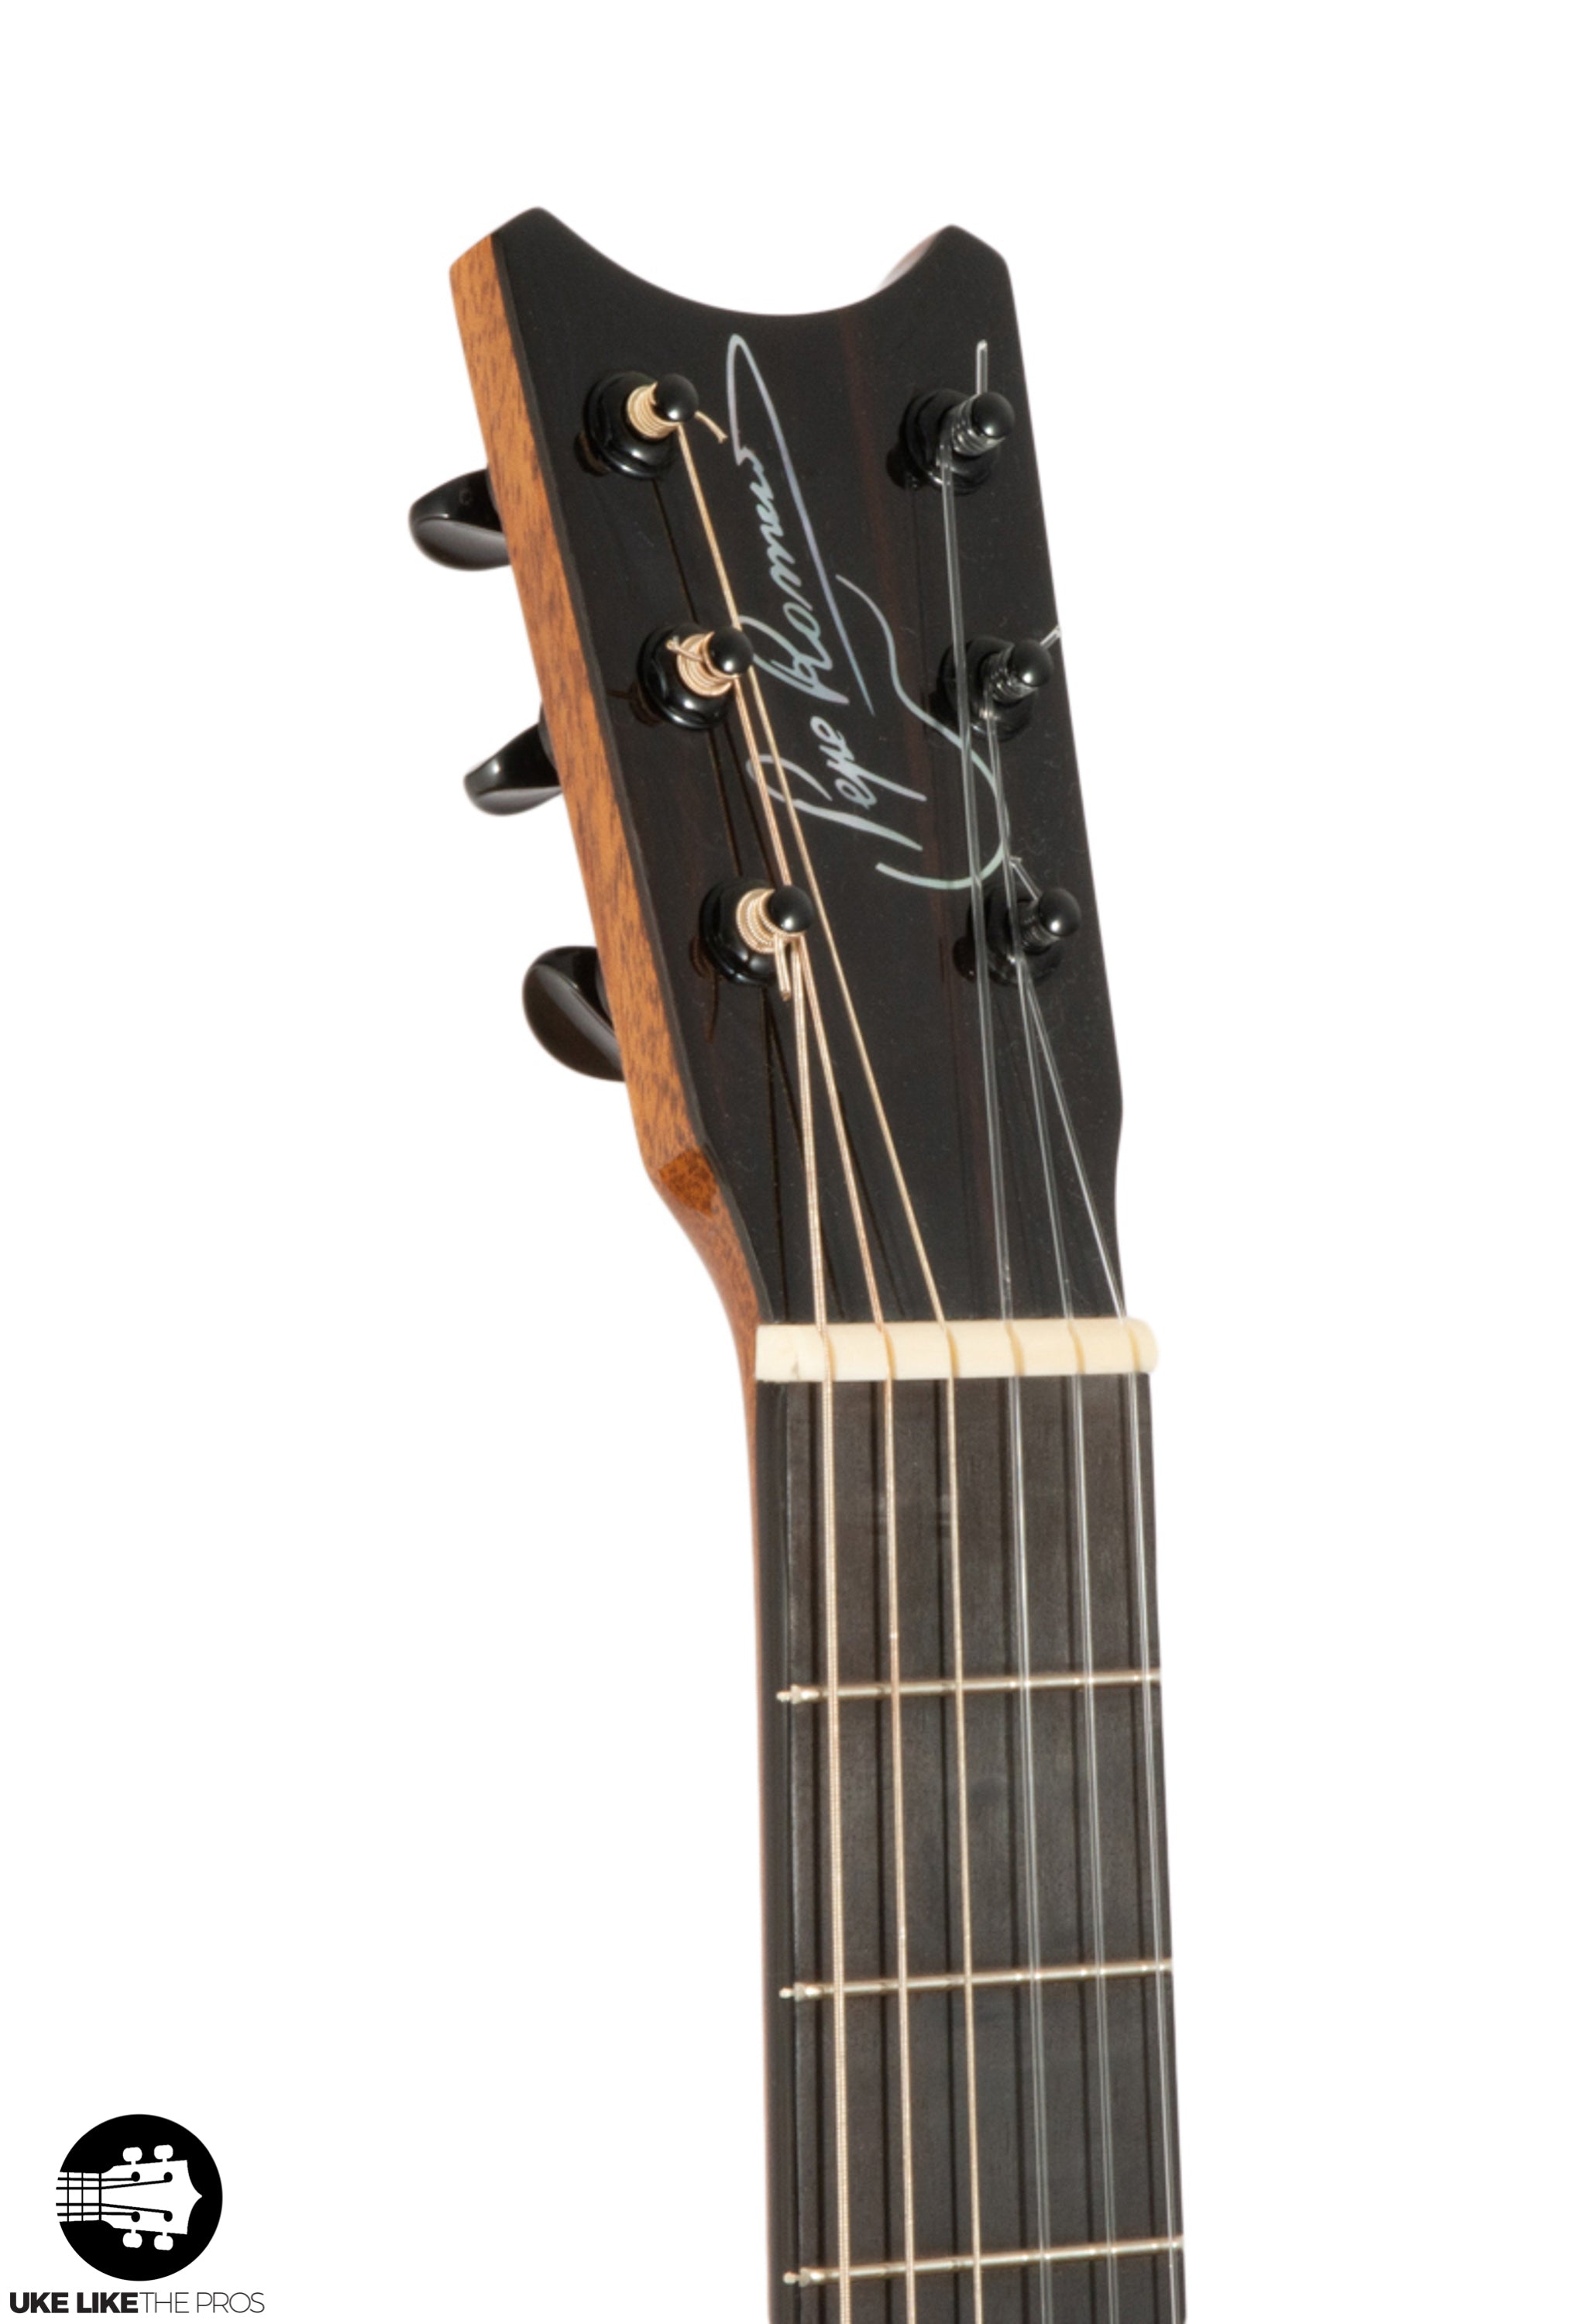 Romero Creations RC-P6-SM Parlor Guitar Spruce Mahogany "Defina" Tuned E to E